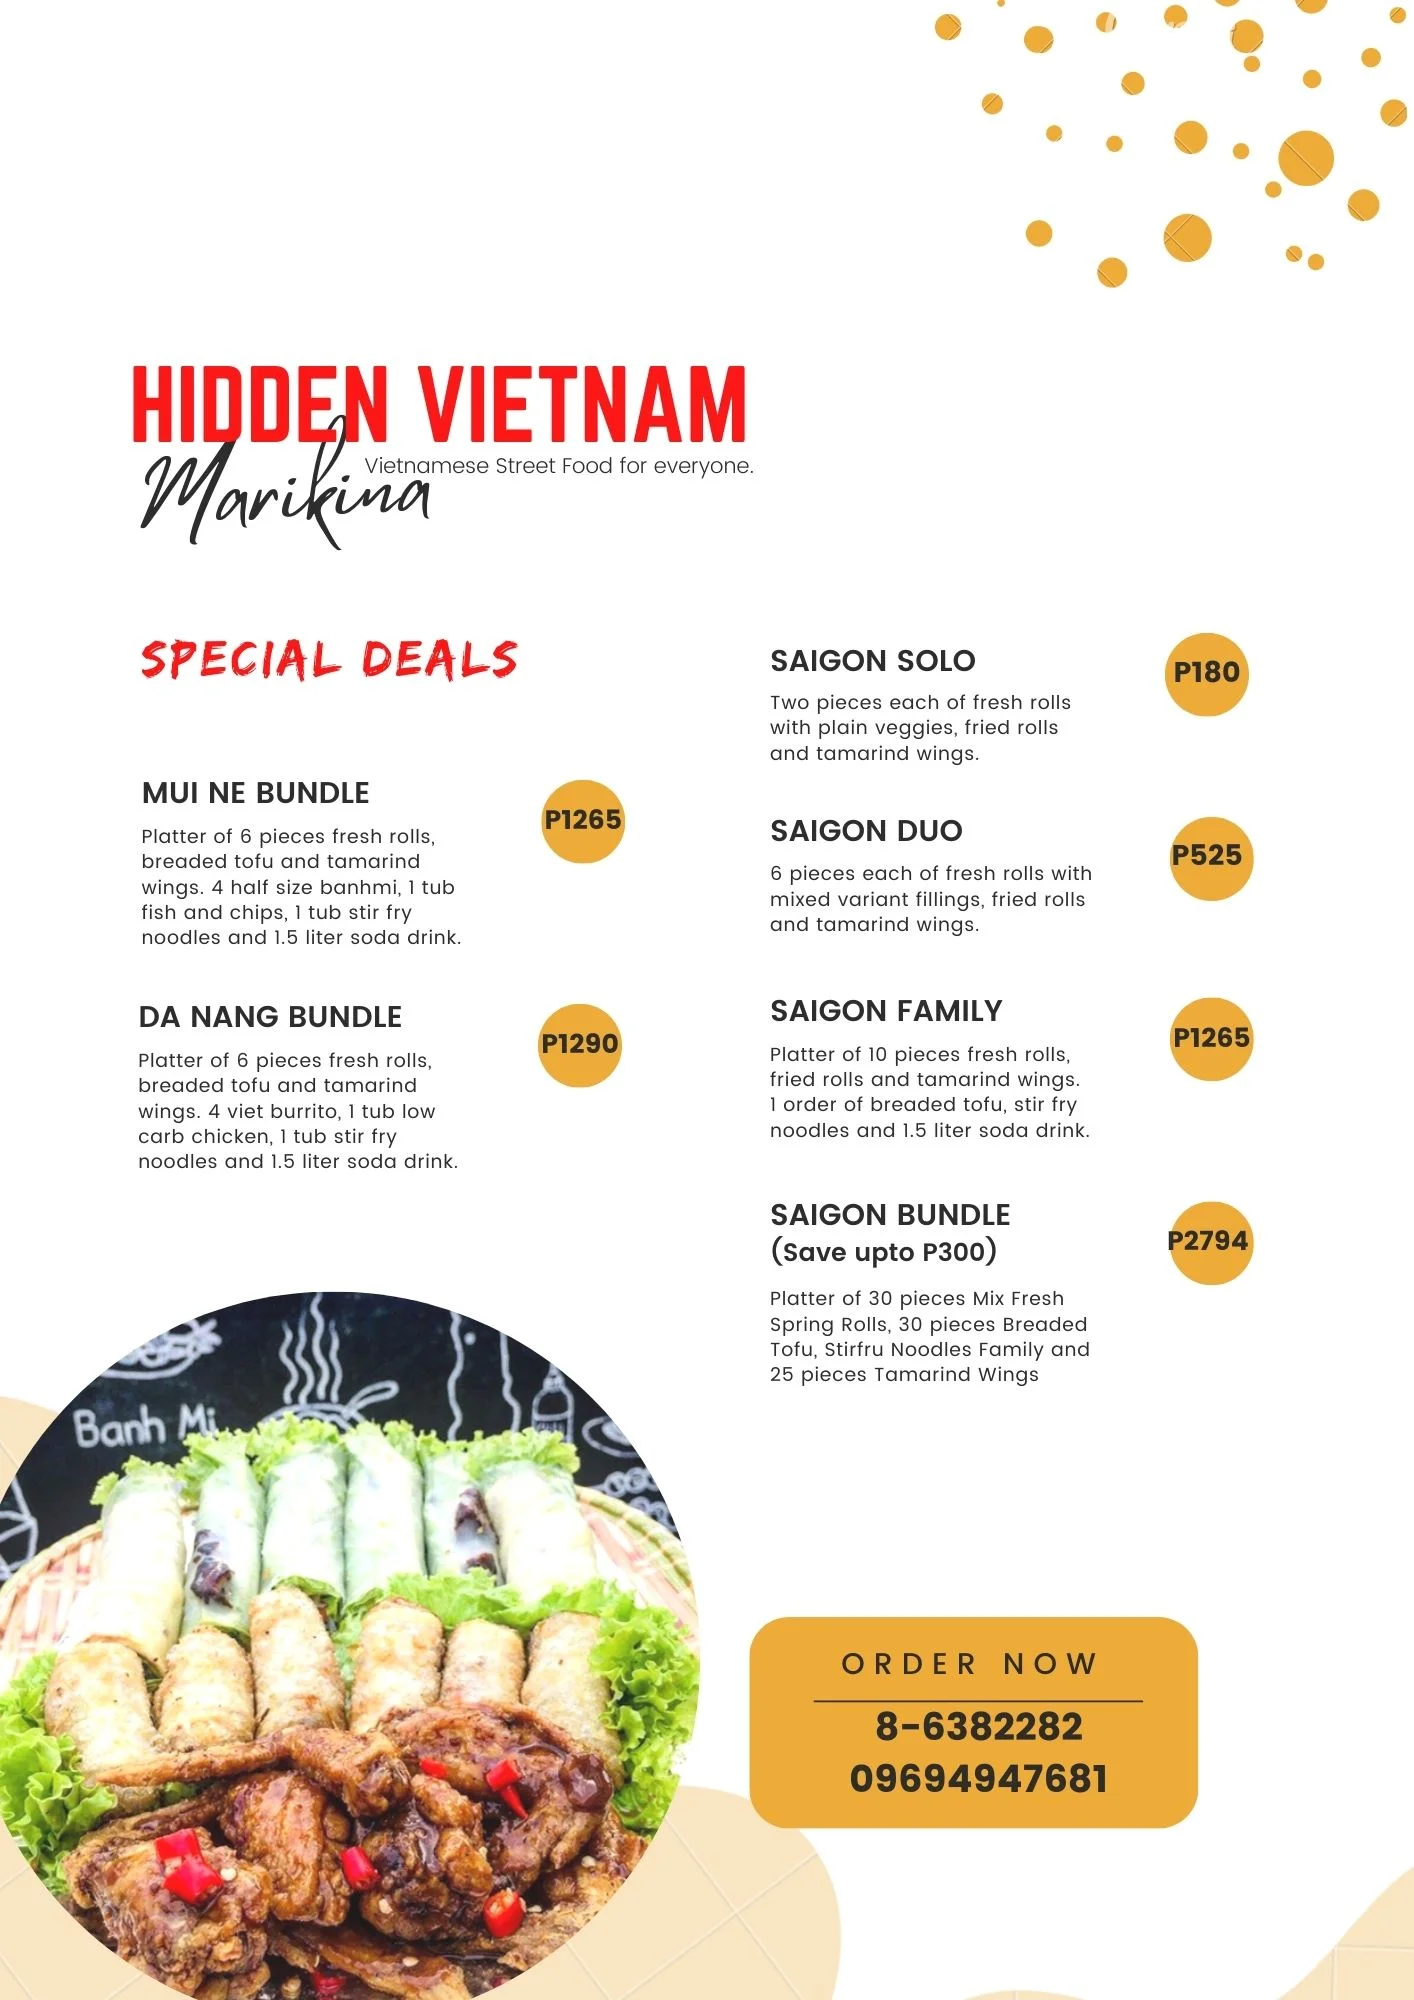 Hidden Vietnam Menu Prices